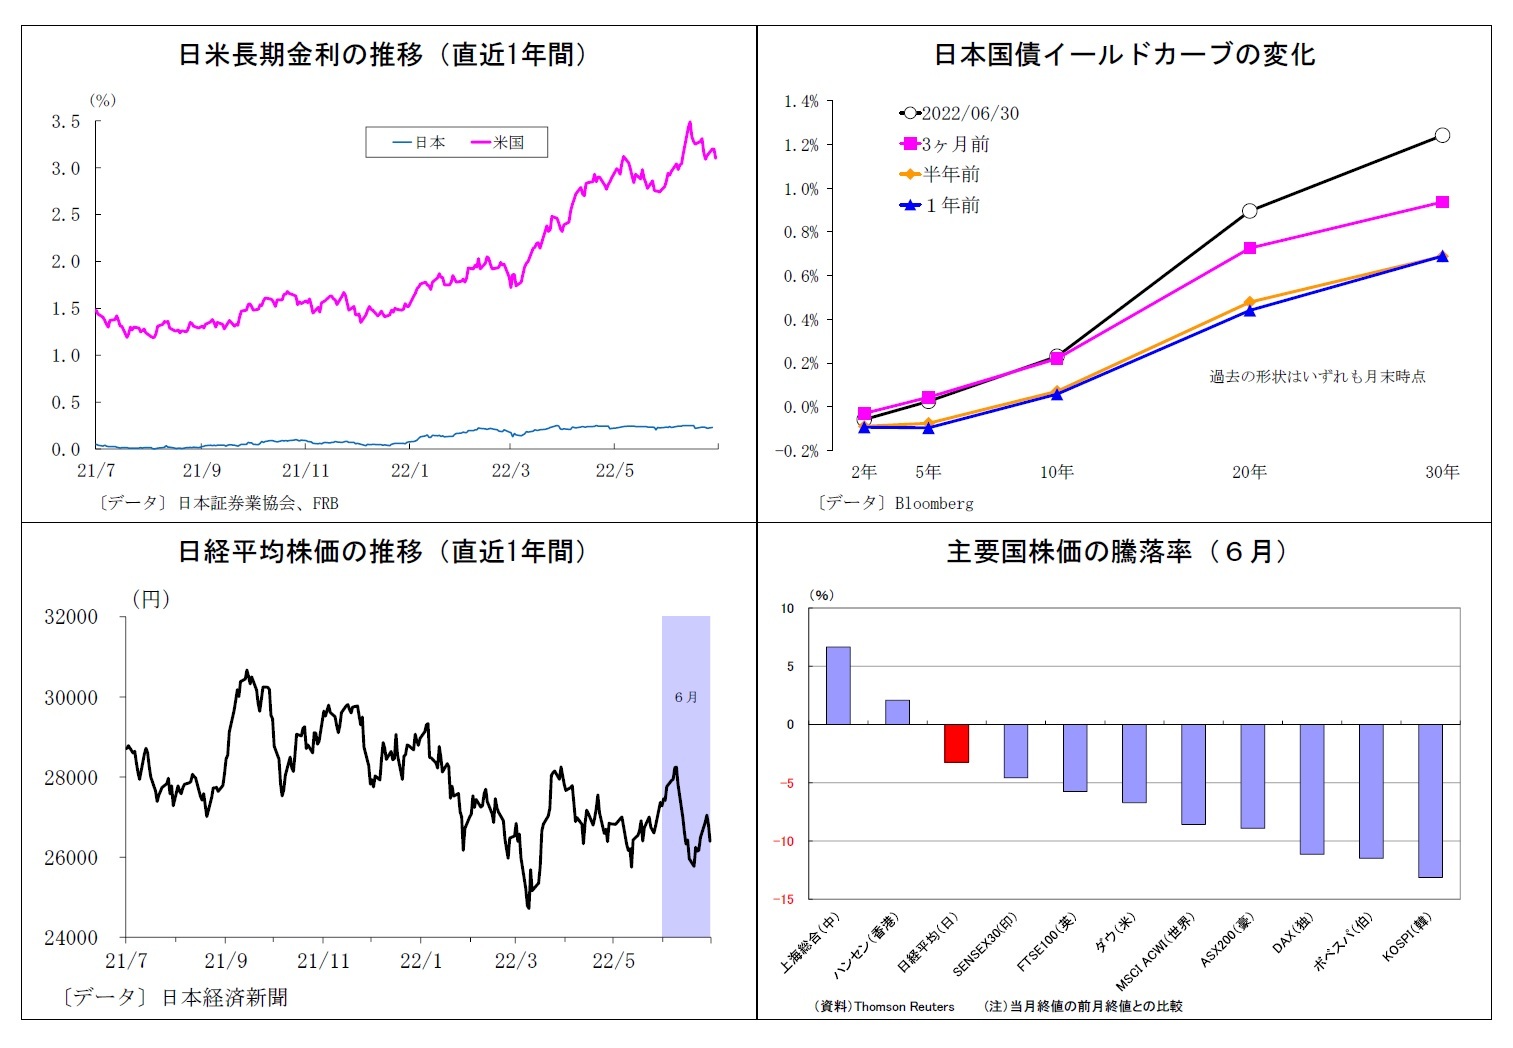 日米長期金利の推移（直近1年間）/日本国債イールドカーブの変化/日経平均株価の推移（直近1年間）/